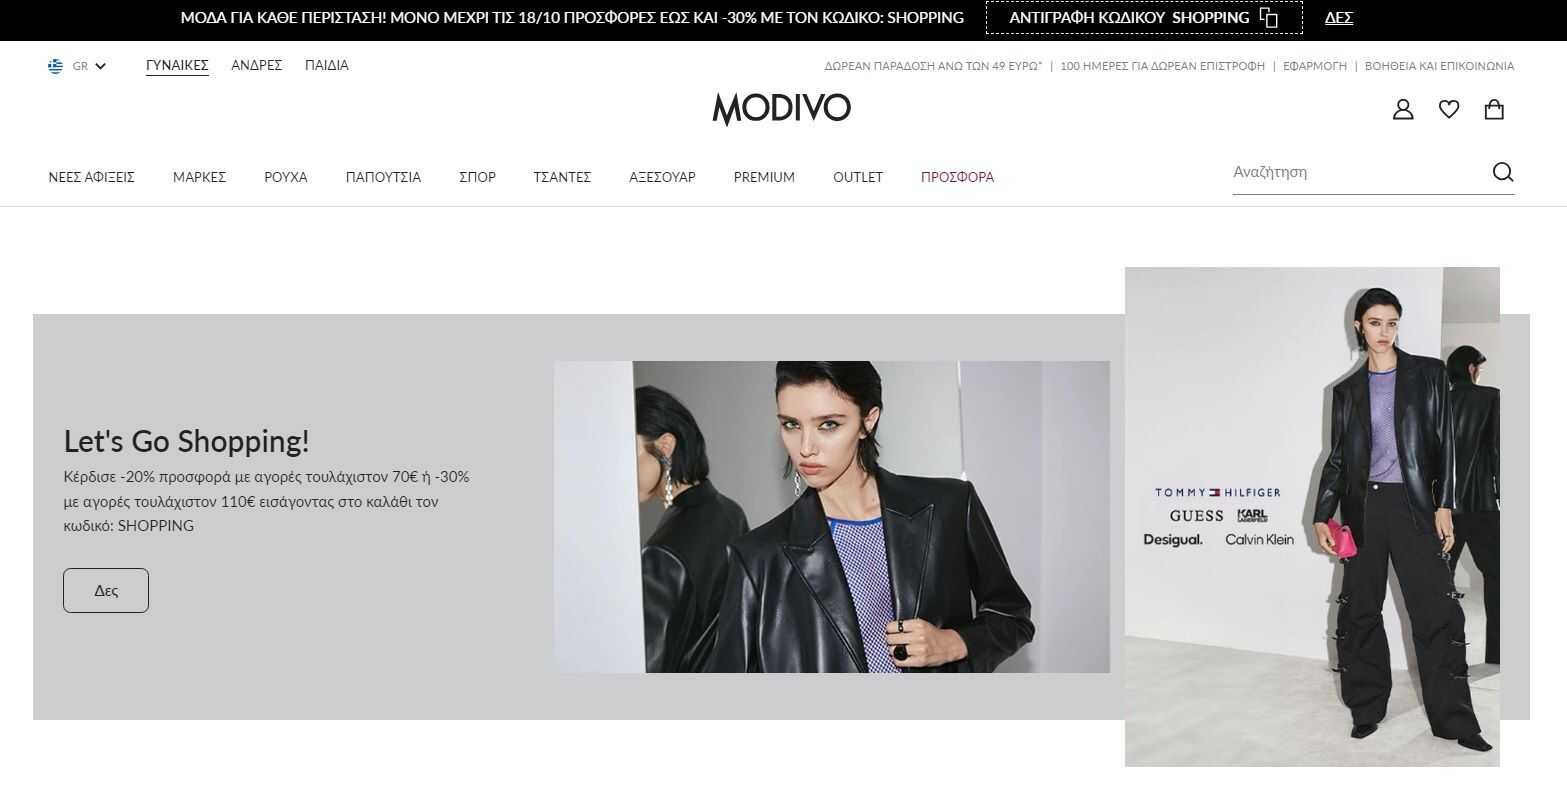 Modivo - ψώνια στο κατάστημα ρούχων, γυναίκα με μάυρο παλτό